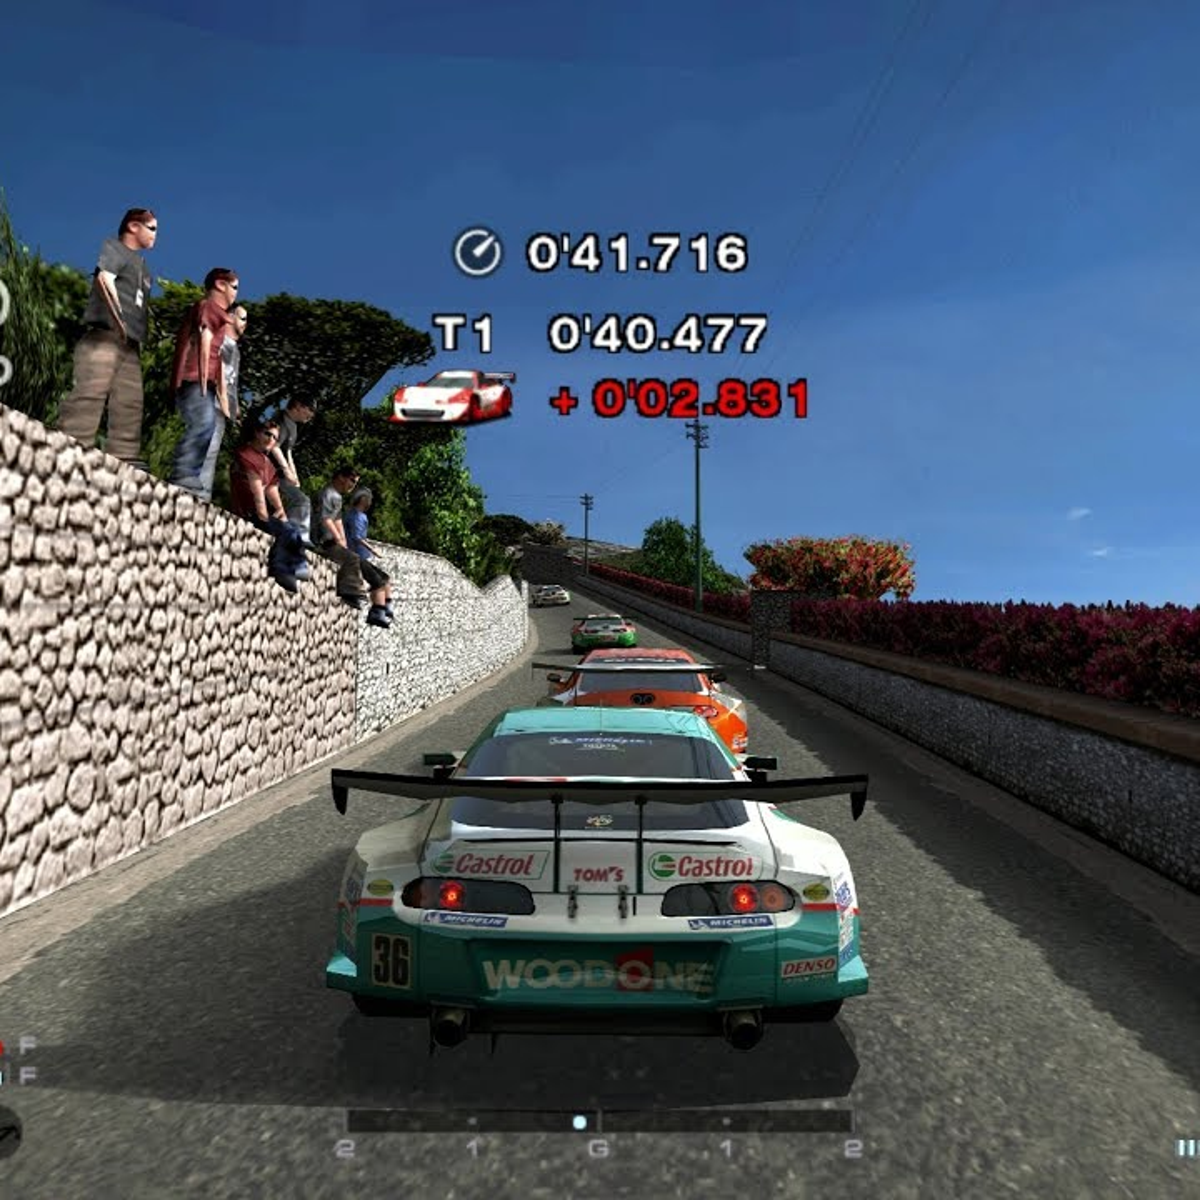 Cheat codes de Gran Turismo 4 descobertos quase 20 anos após o lançamento